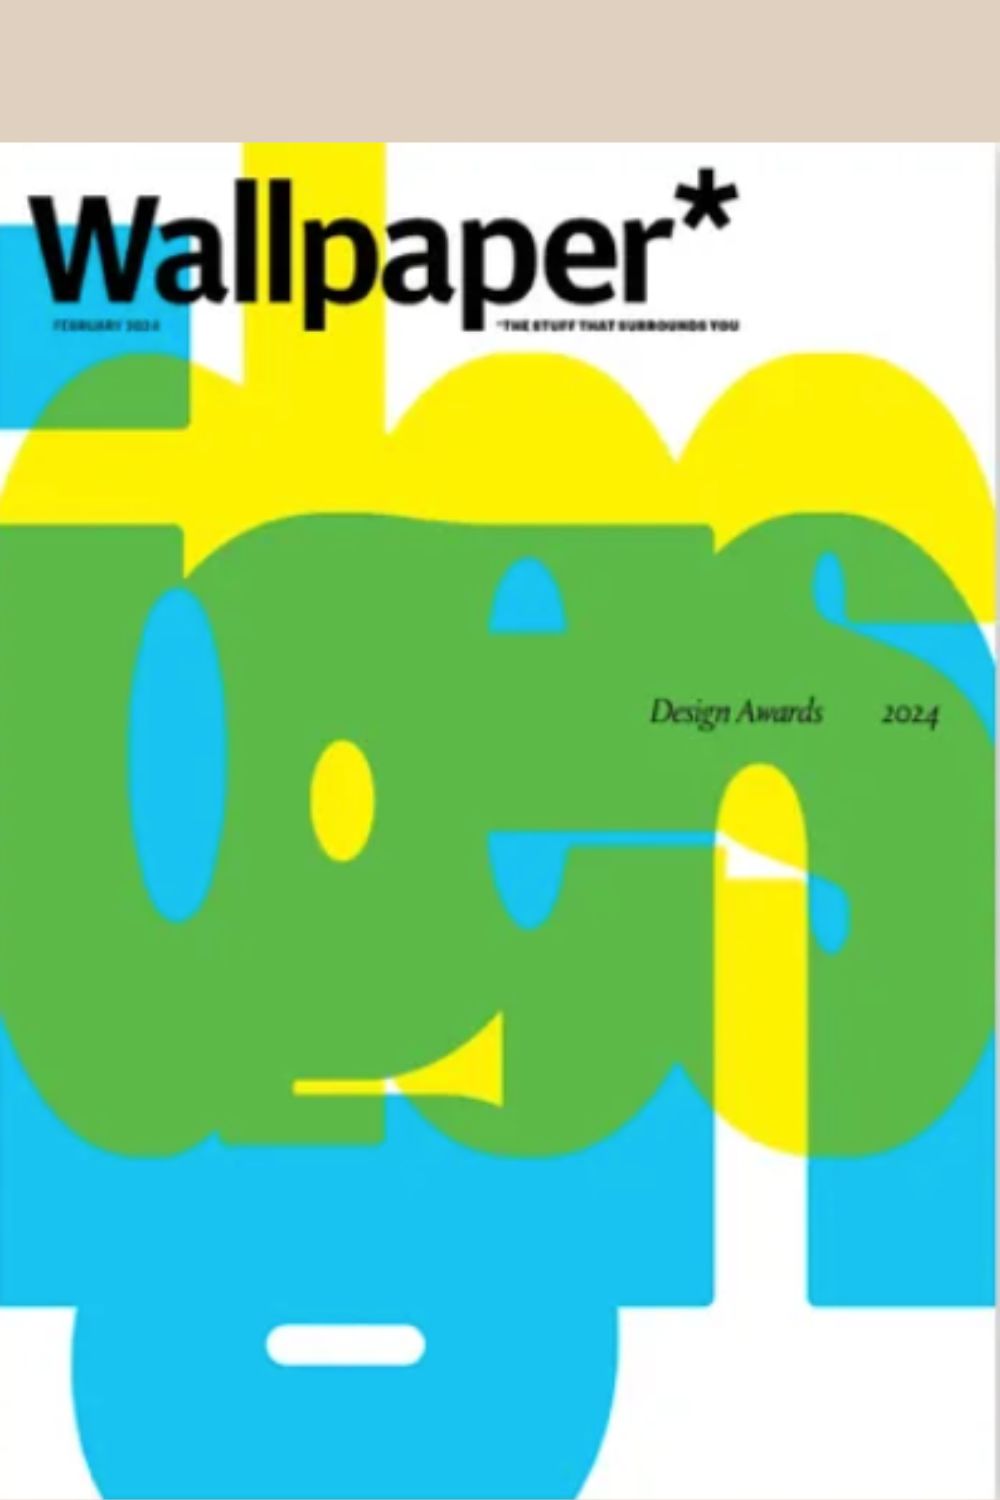 Wallpaper* magazine February 2024 cover